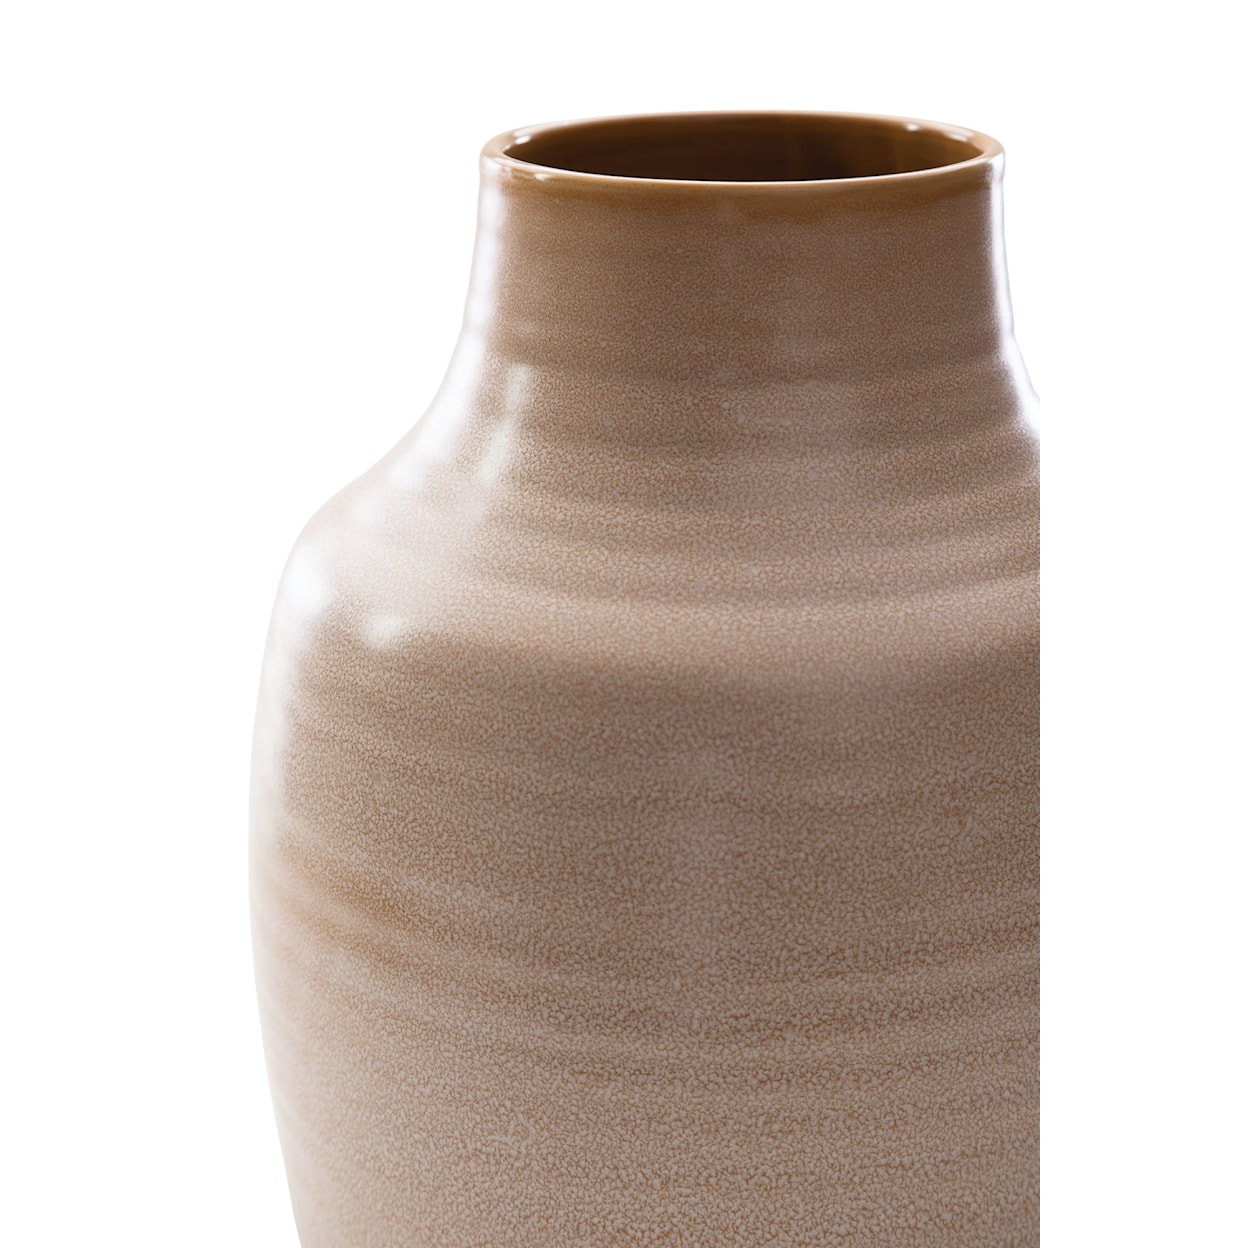 Ashley Furniture Signature Design Millcott Vase